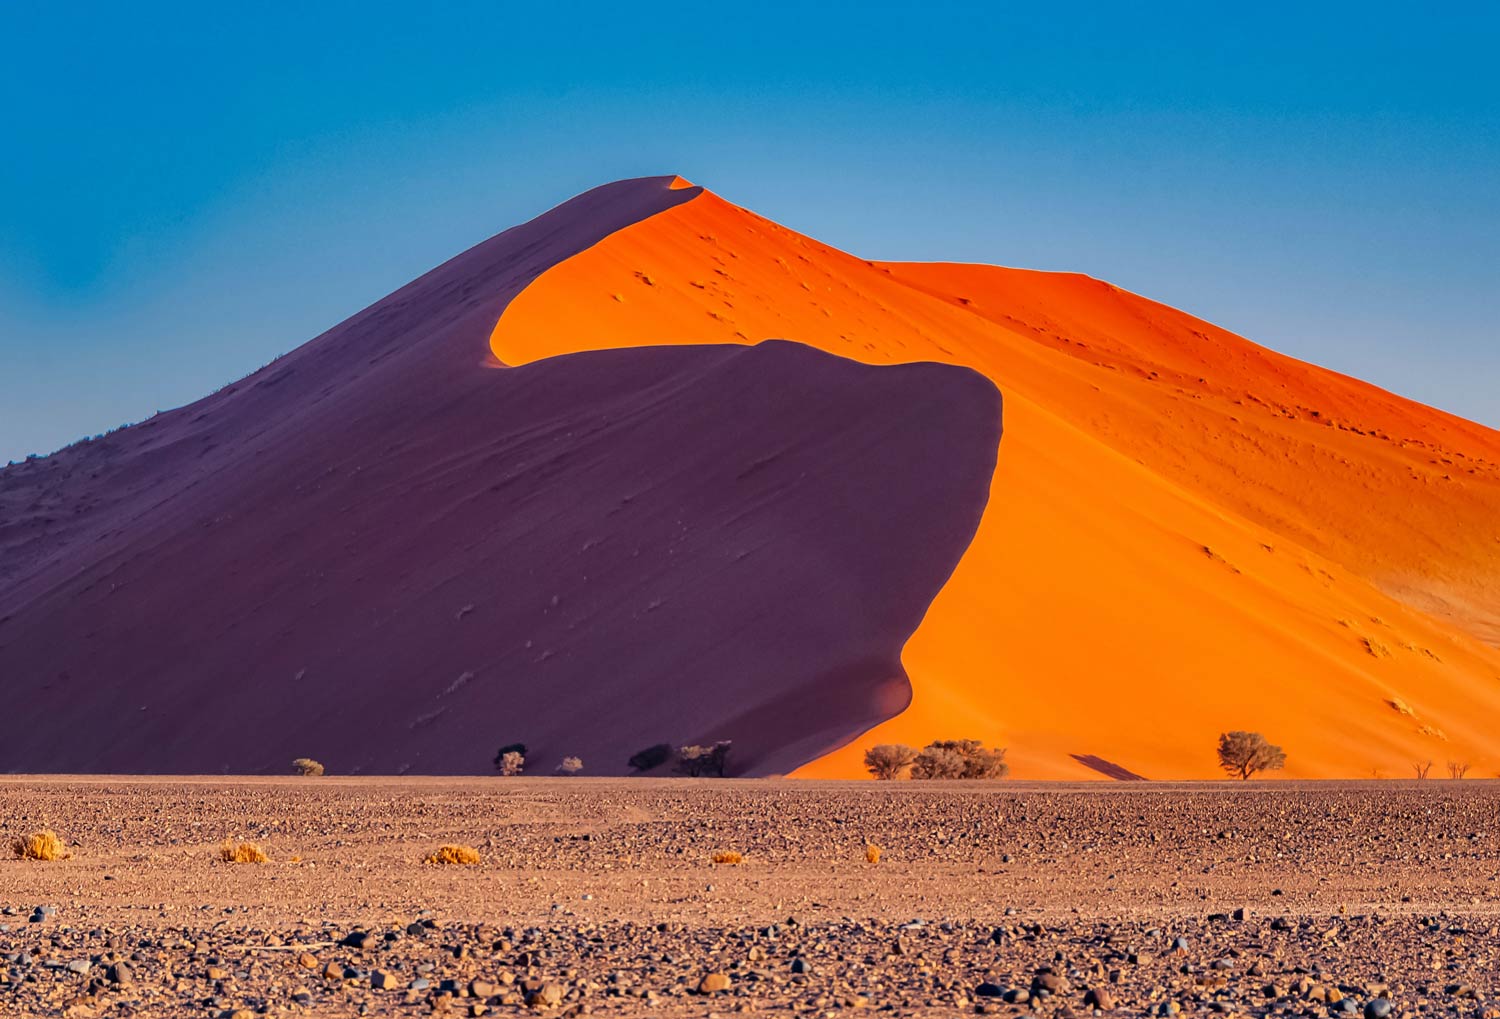 One of many beautiful dunes in the Namib desert, Sossusvlei, Namibia